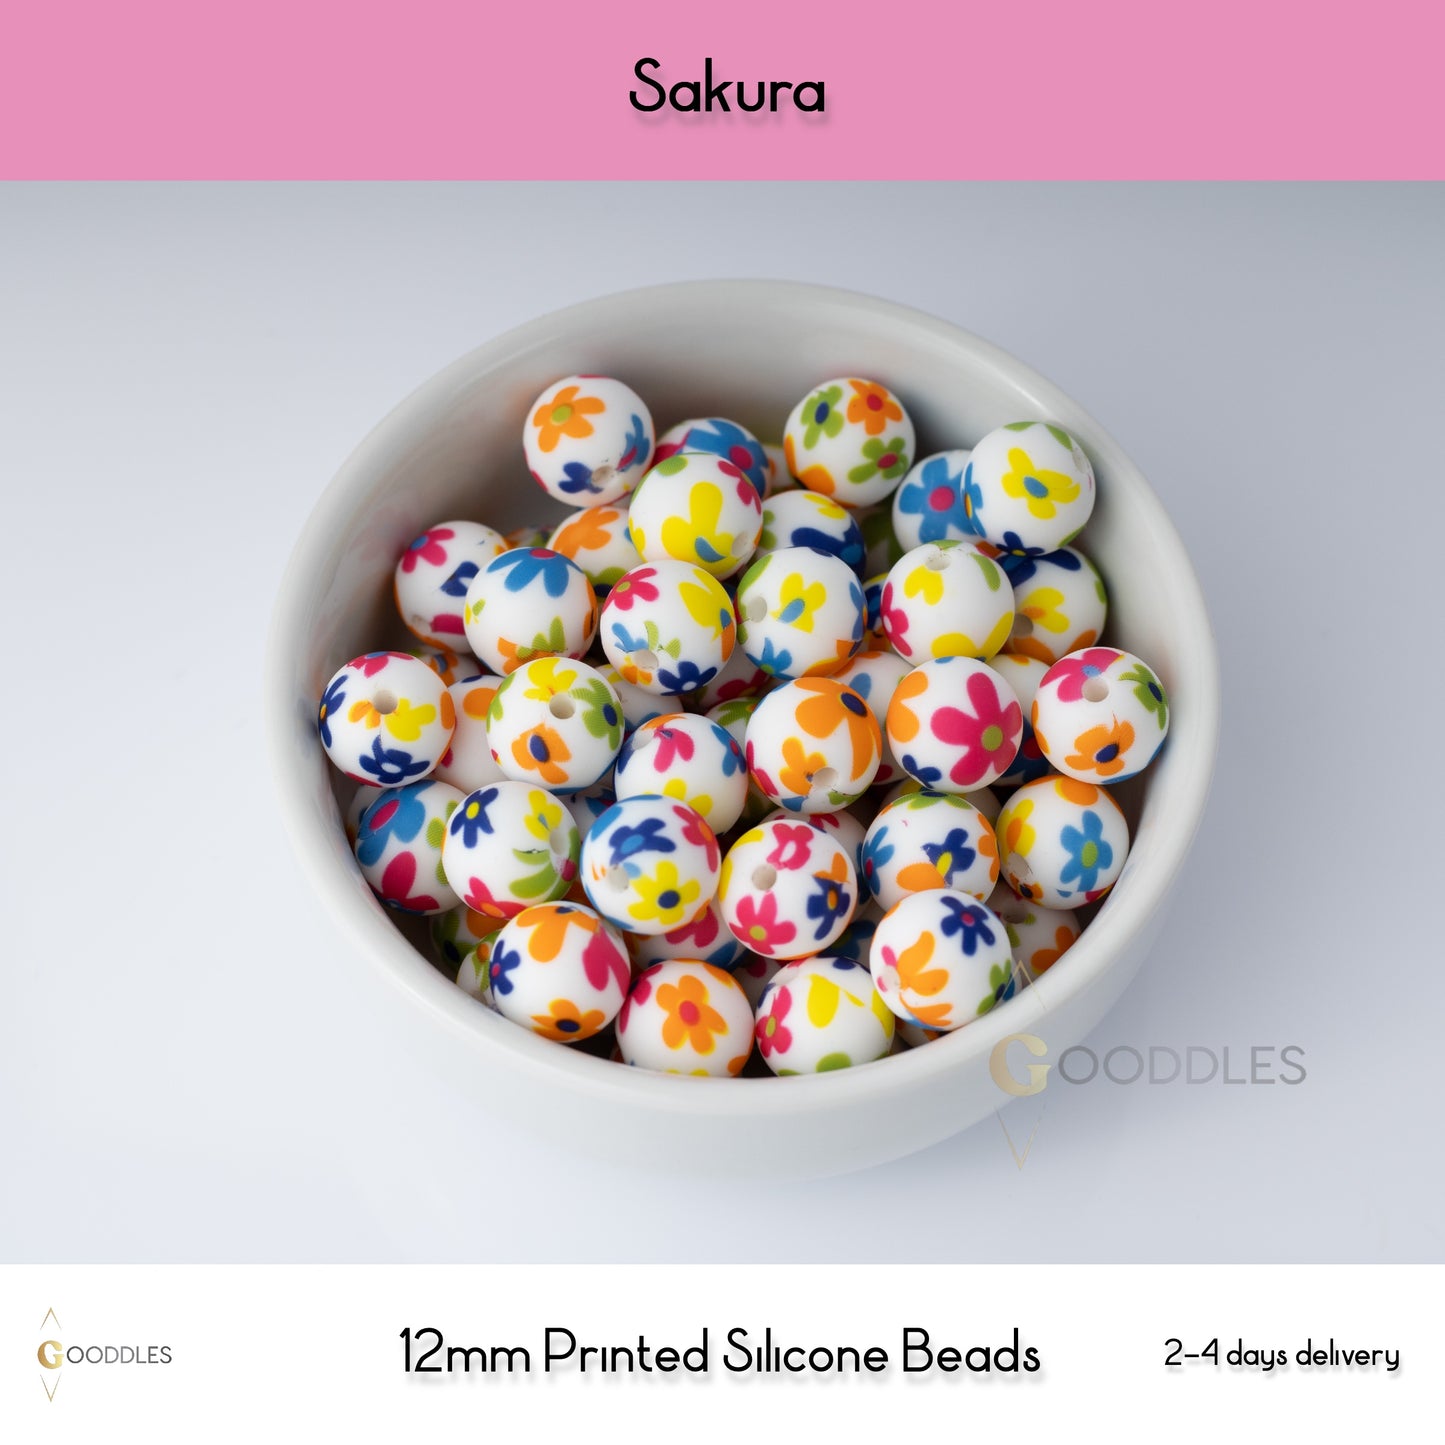 5pcs, Sakura Silicone Beads Printed Round Silicone Beads